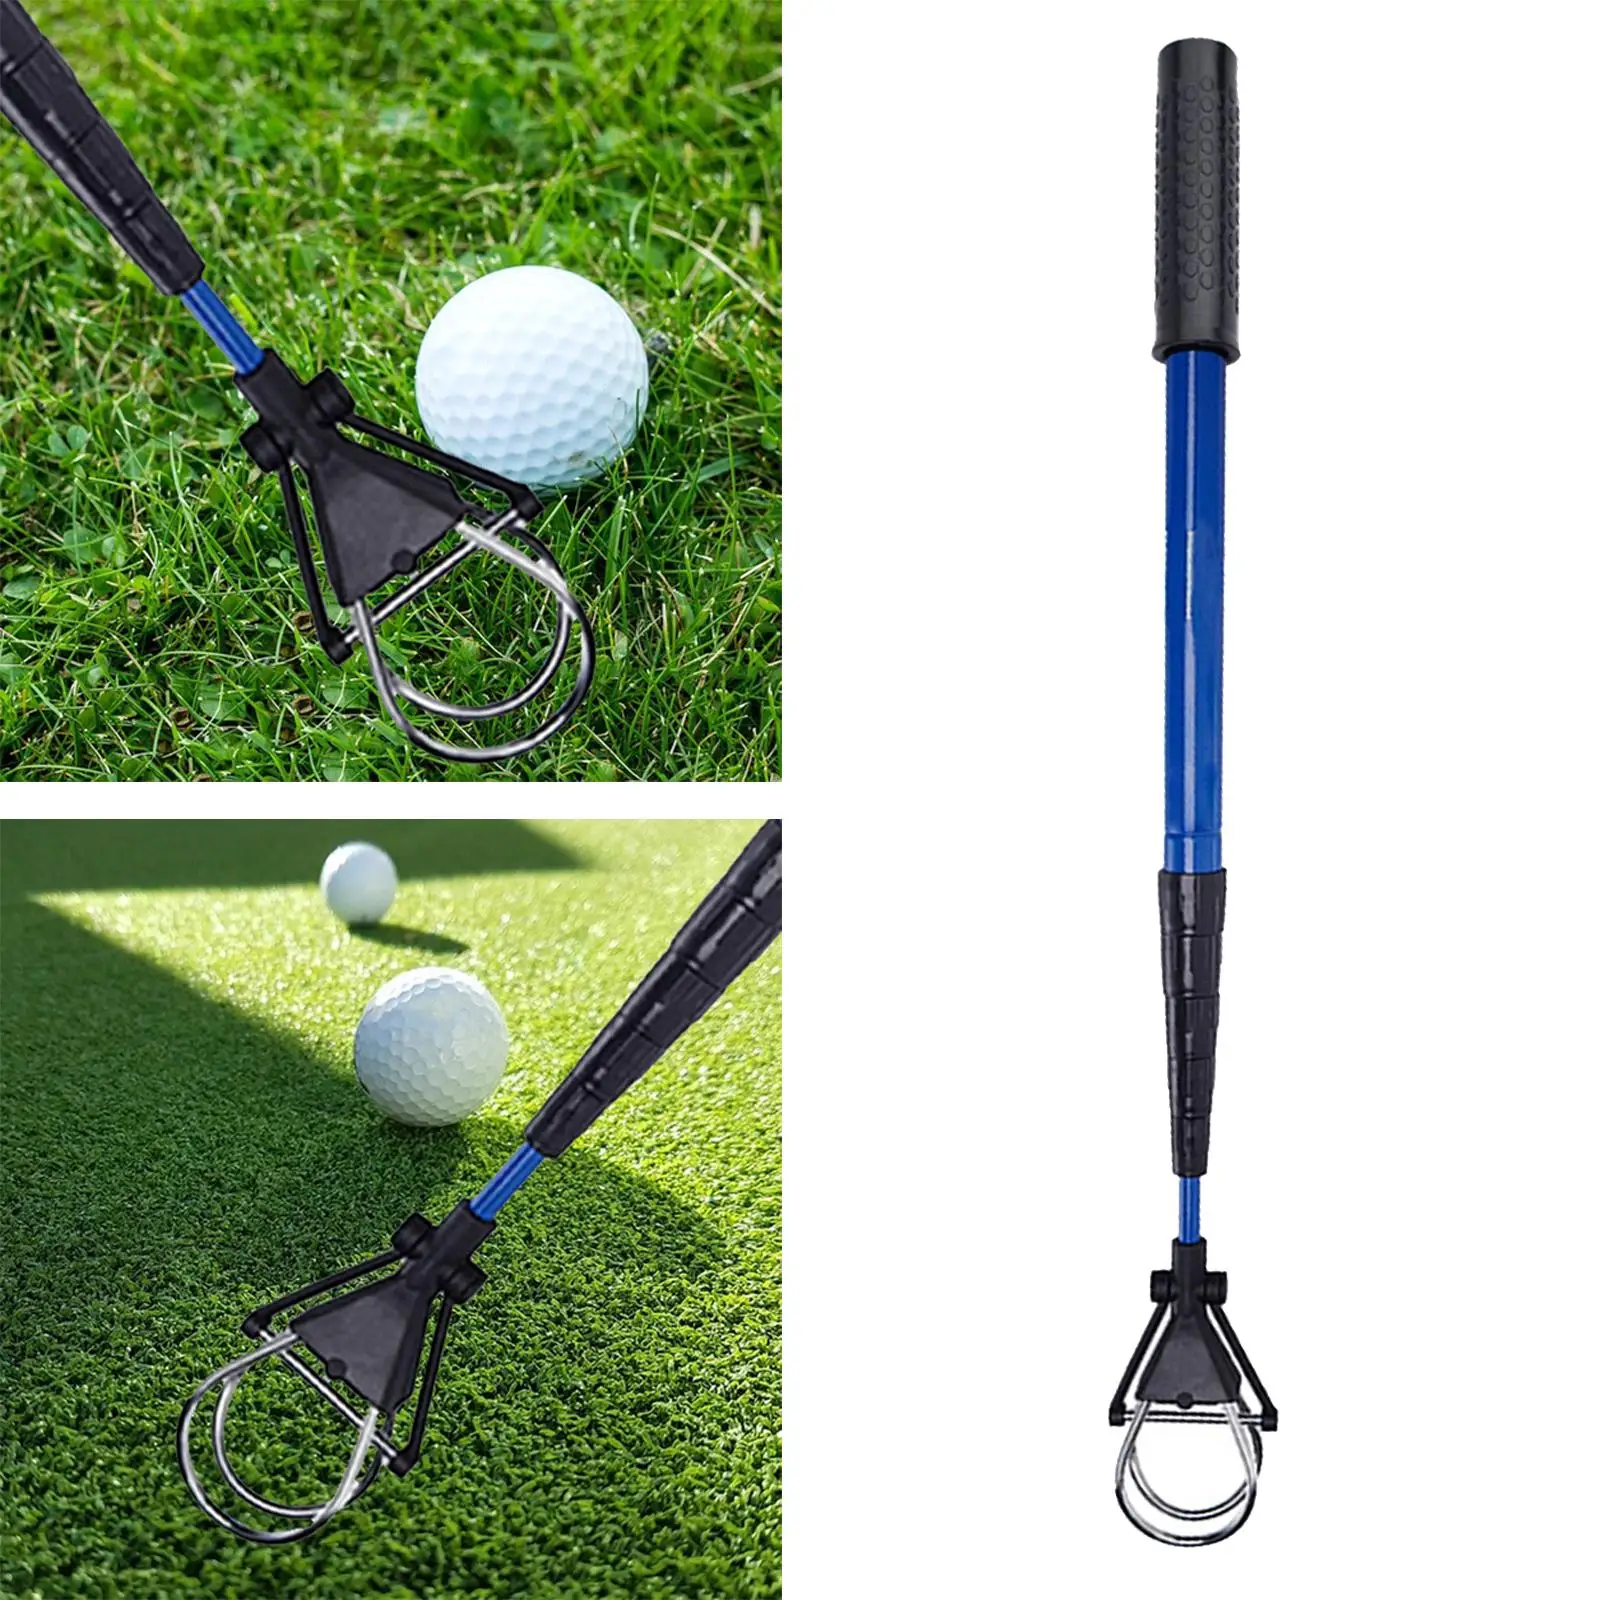 Portable Golf Ball Retriever Locking Accessories Practical Saver Shaft Tool Shaft for Water Women Men Outdoor Pick up